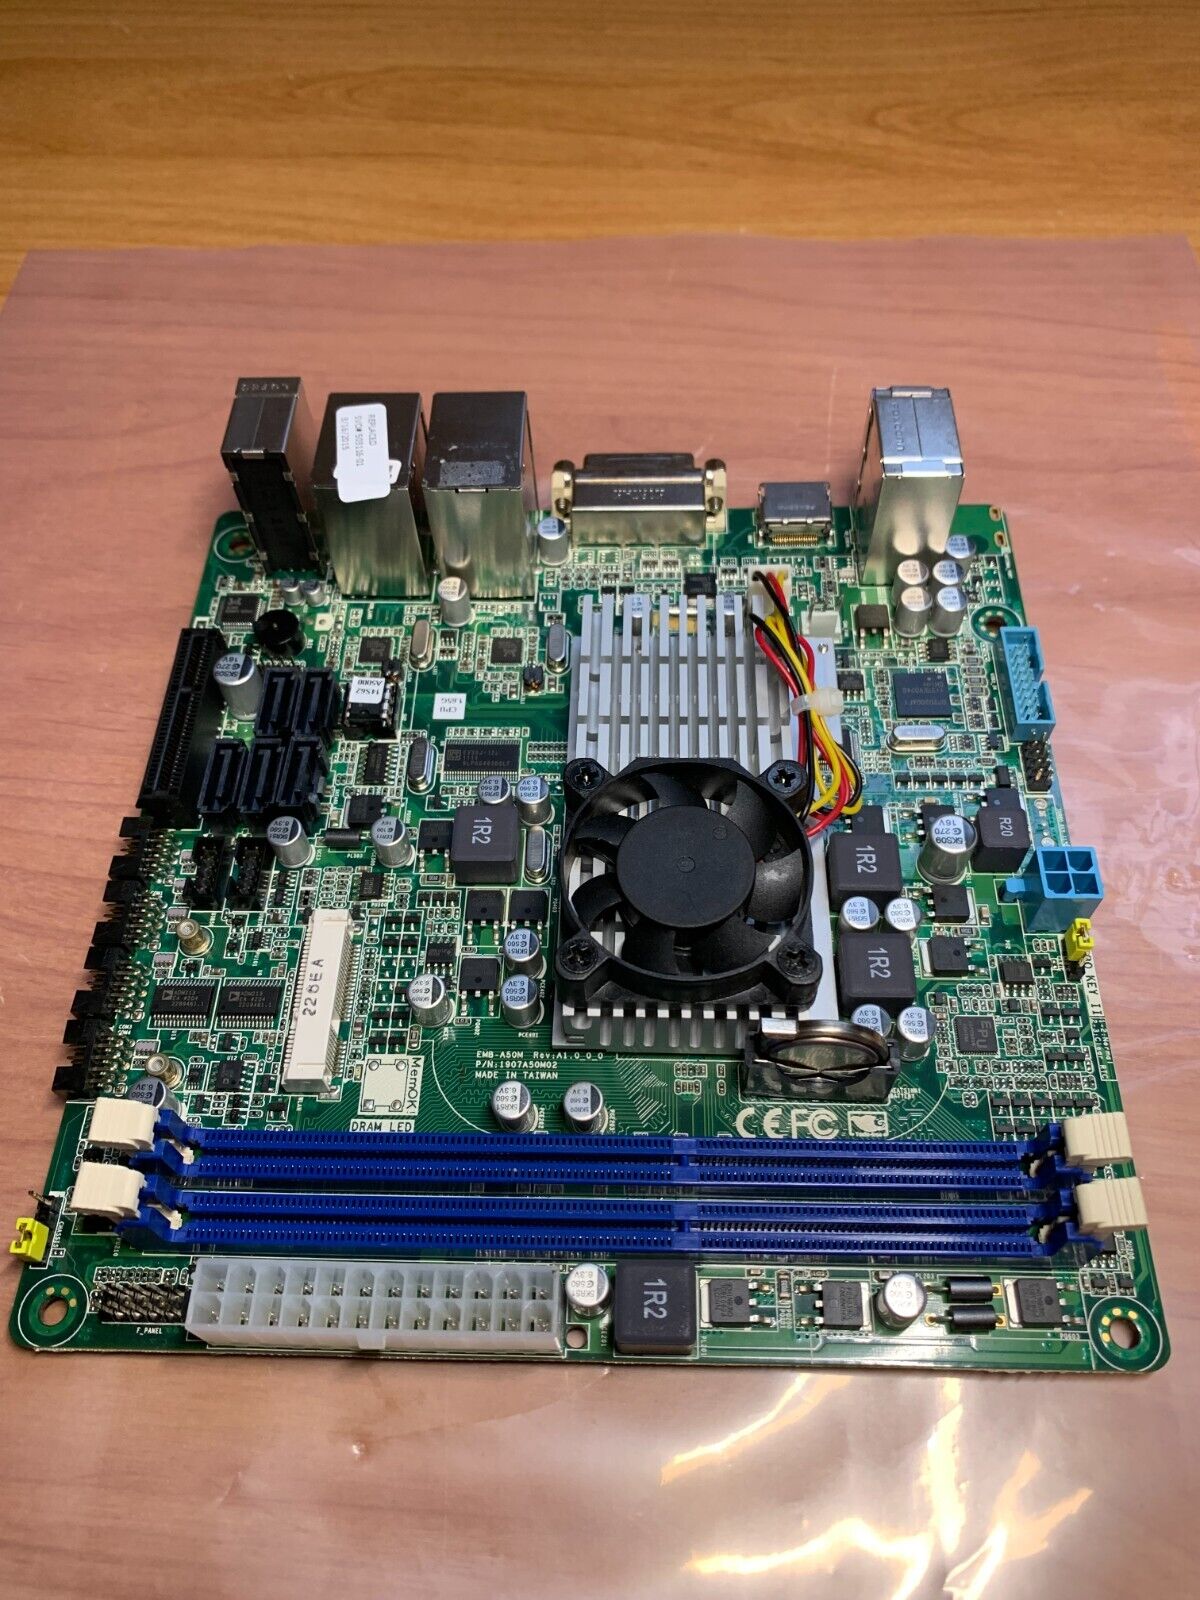 AAEON EMB-A50M Mini-ITX Embedded Motherboard w/ Onboard AMD Fusion APU Processor